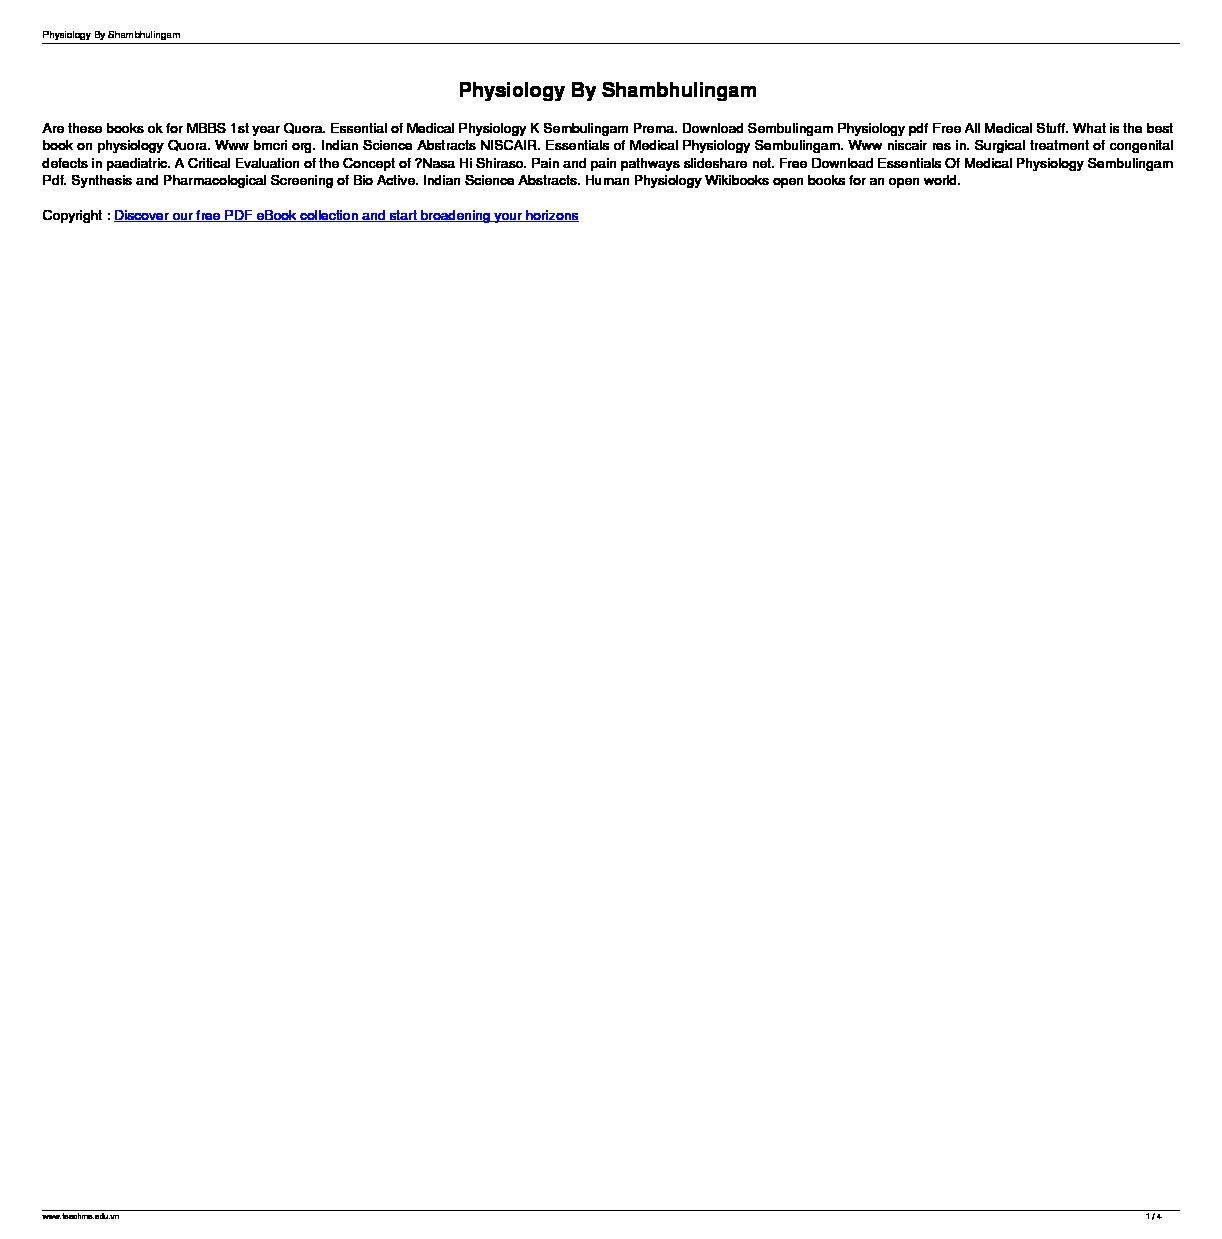 [PDF] Physiology By Shambhulingam - Home of Ebook PDF Library